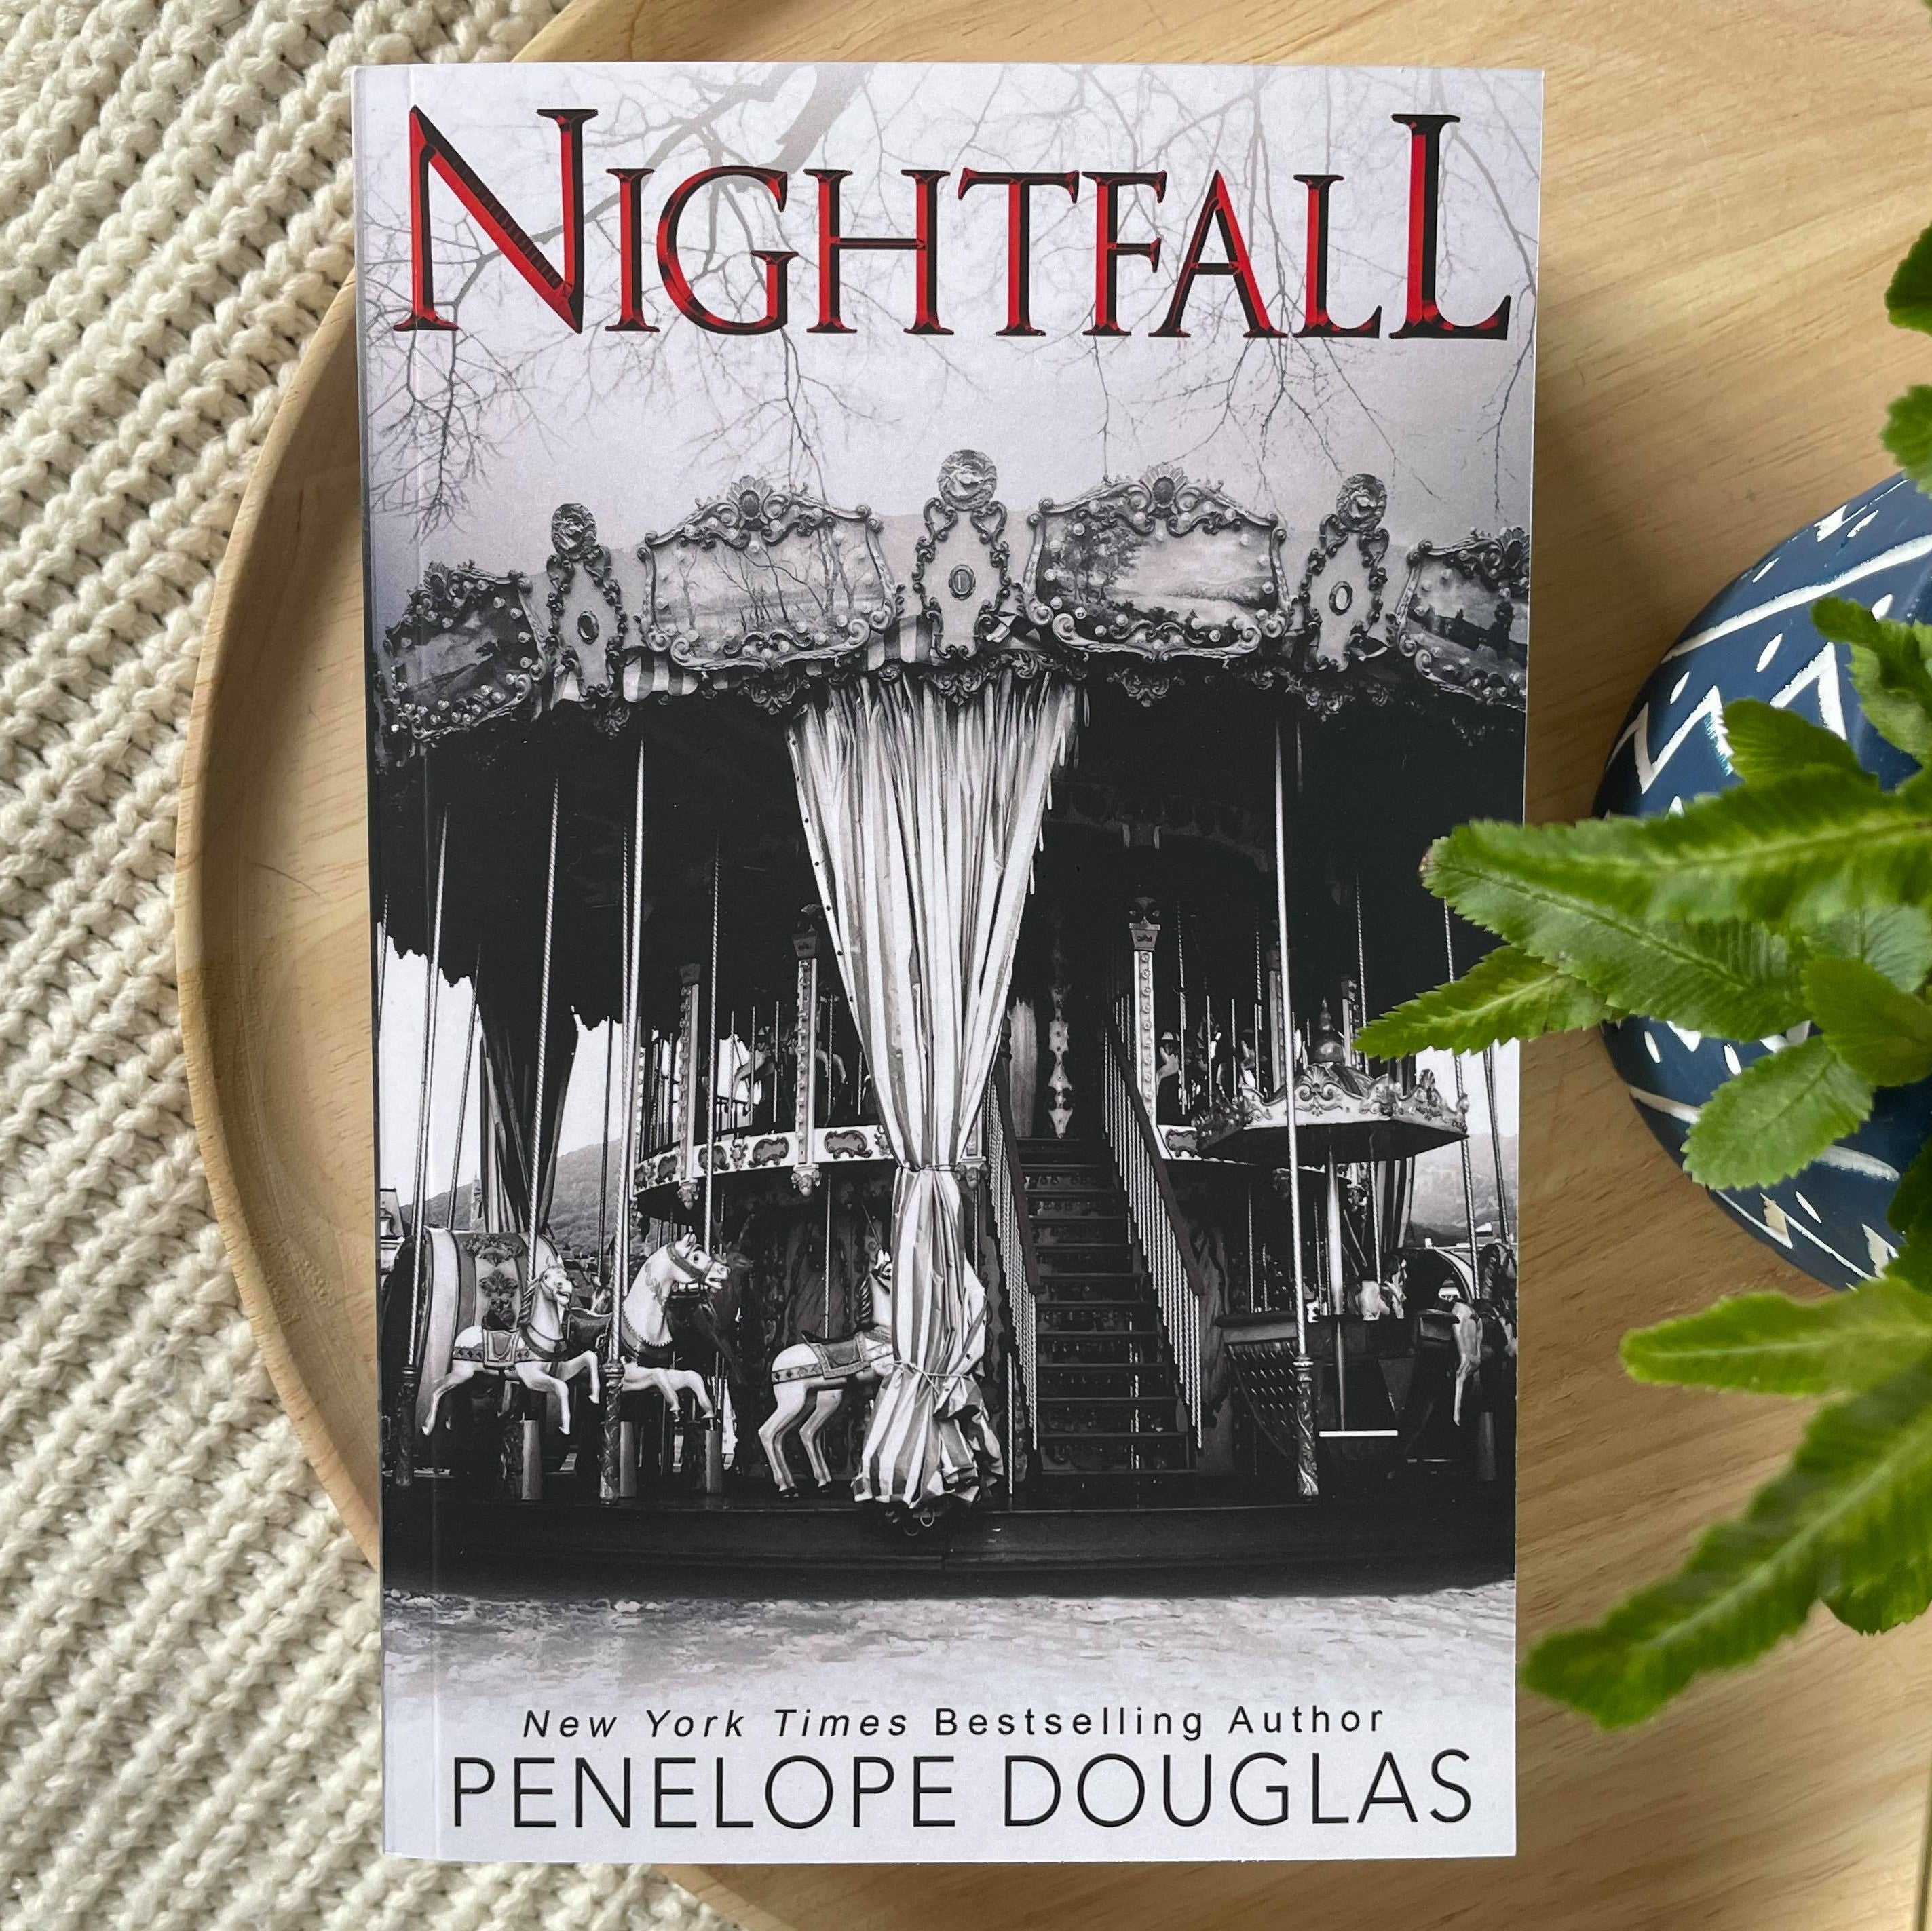 Devil's Night series by Penelope Douglas